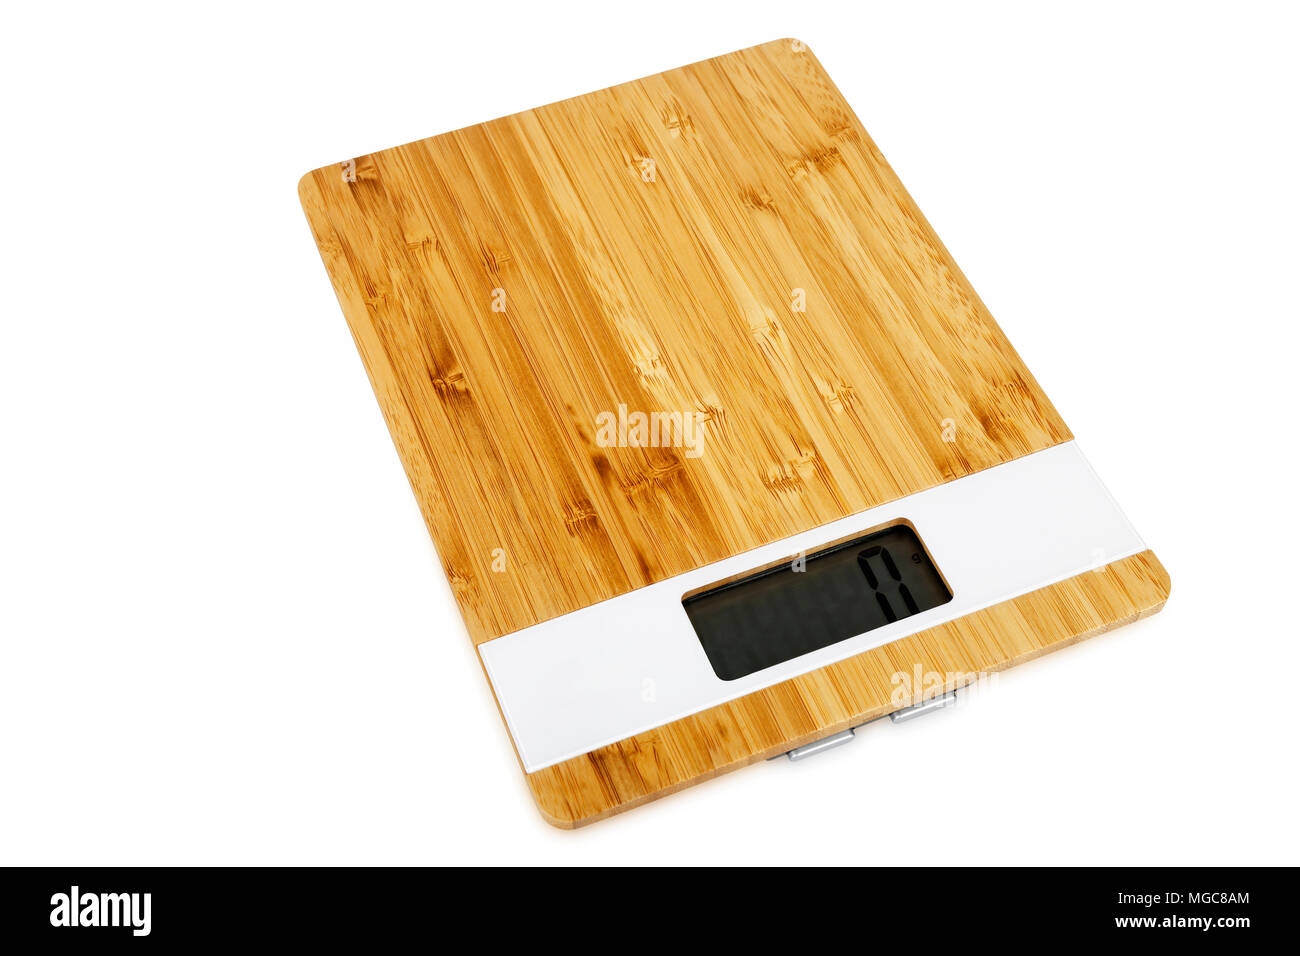 digital kitchen scale isolated on white background Stock Photo